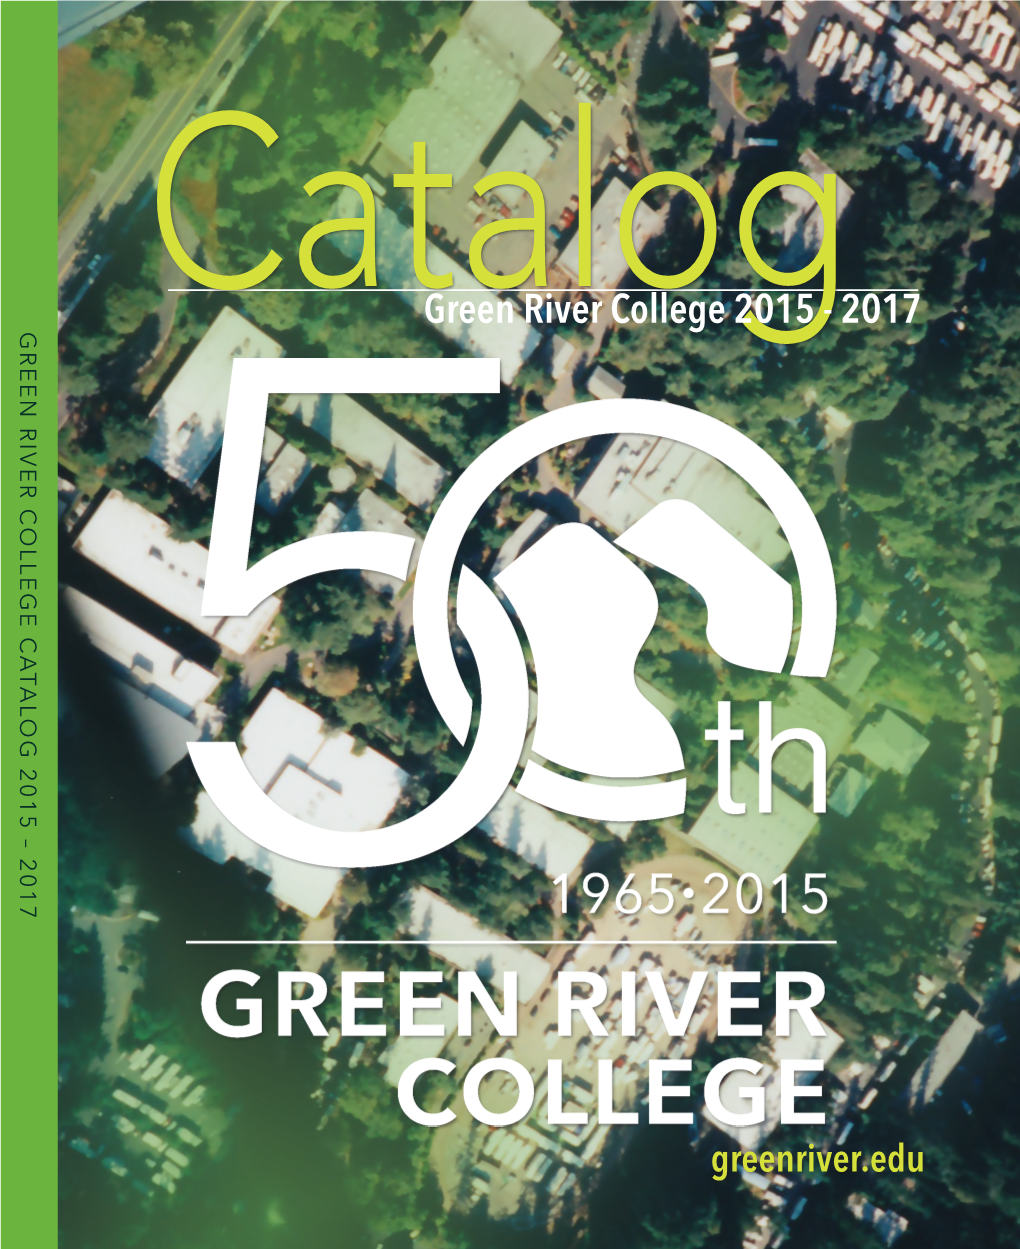 Green River College 2015 - 2017